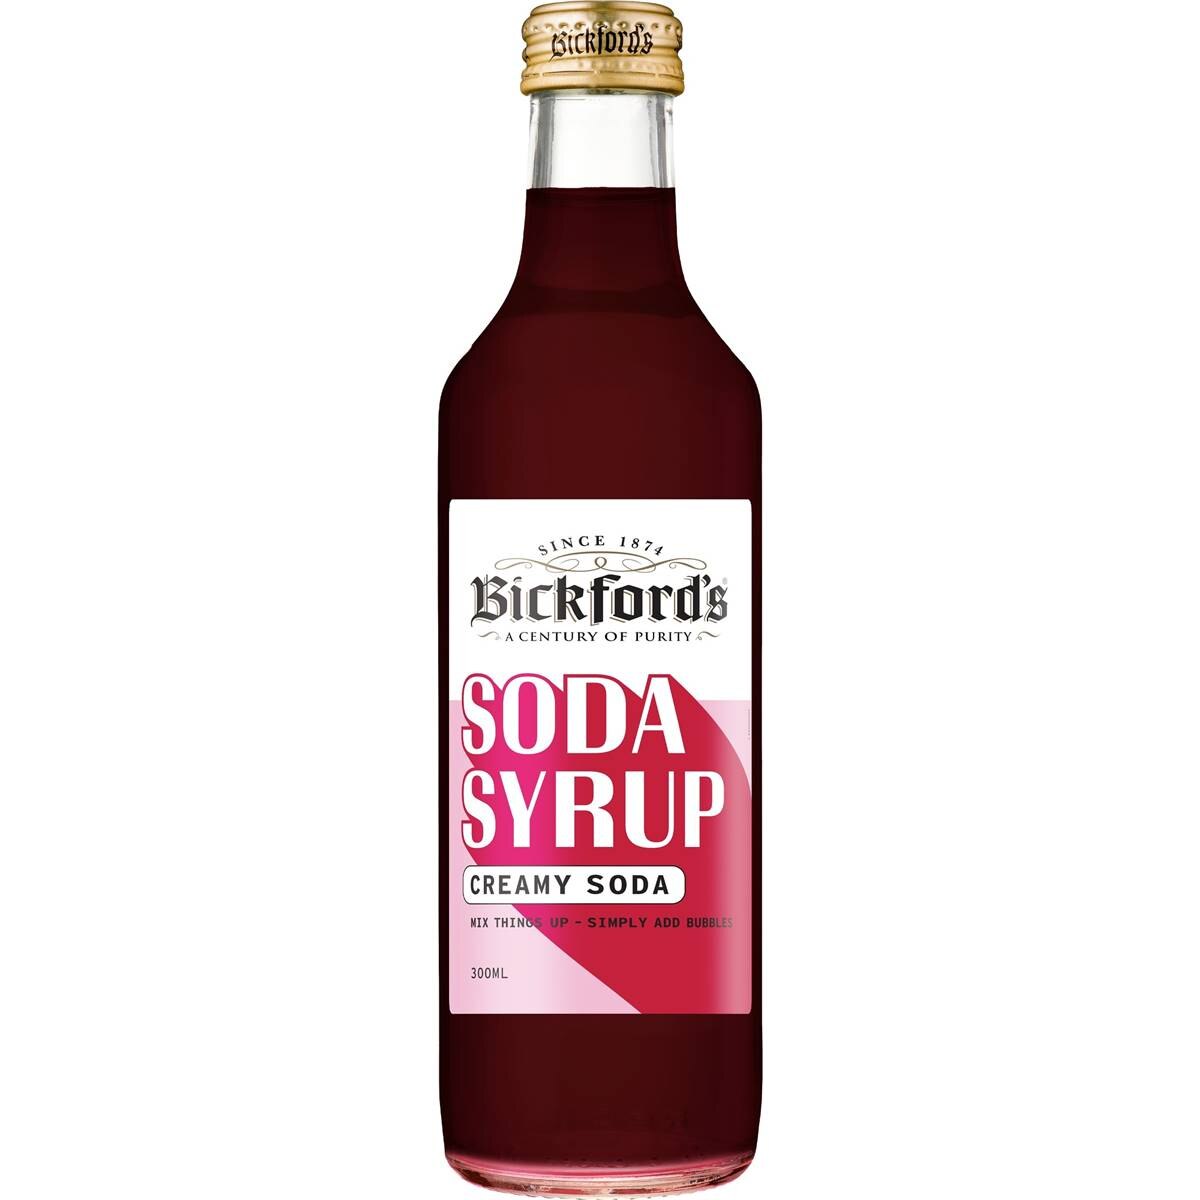 Calories in Bickford's Soda Syrup Creamy Soda